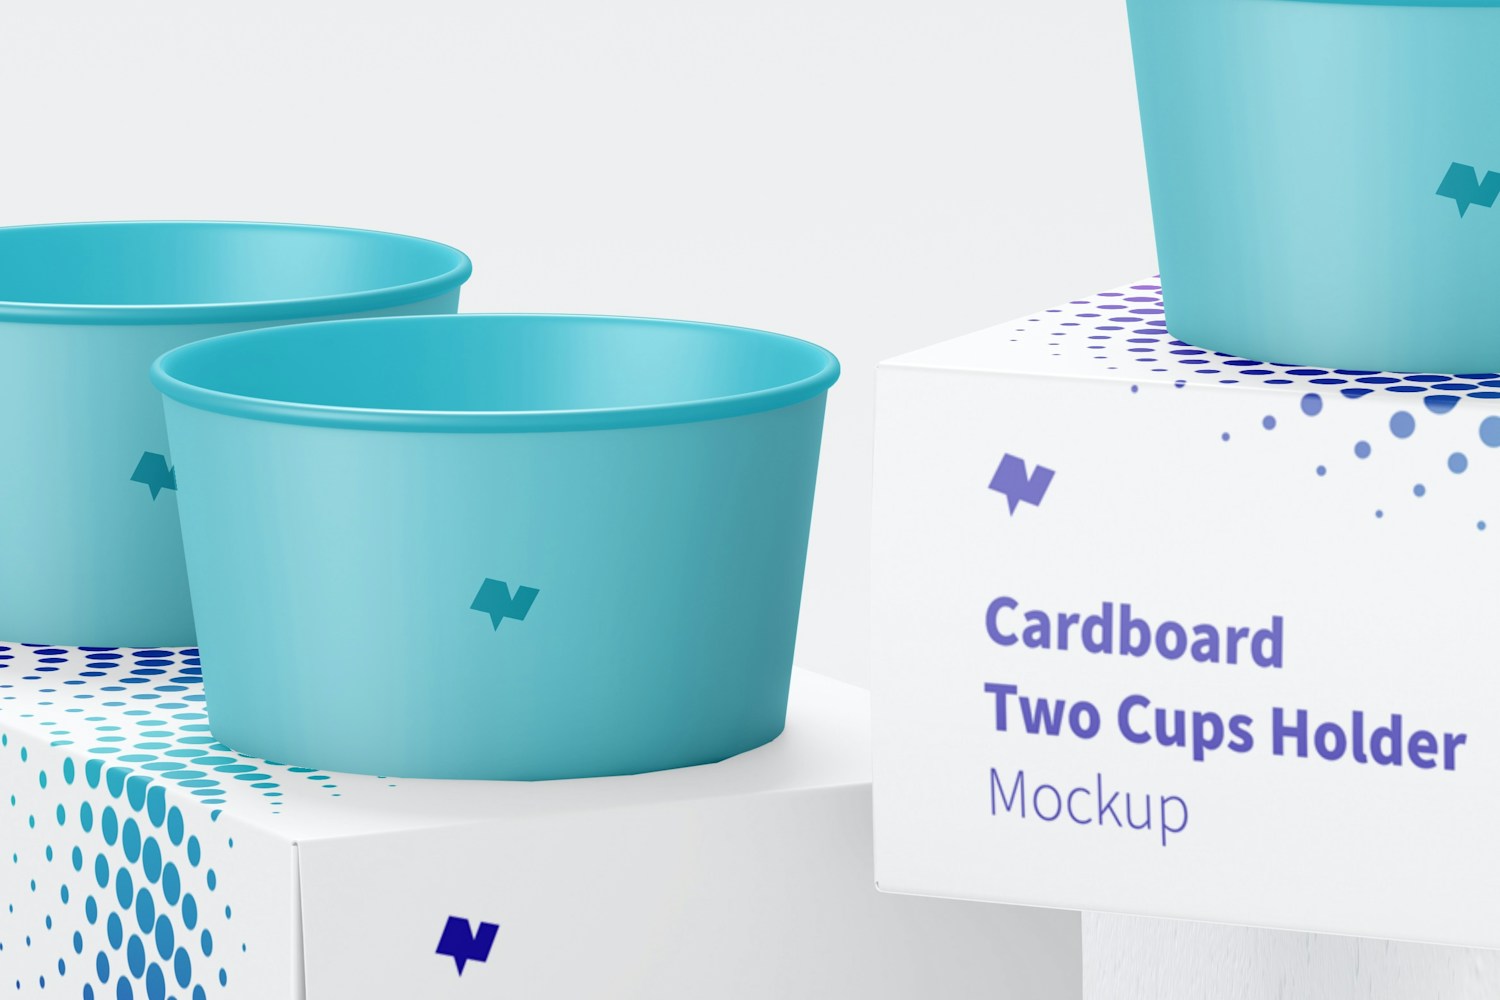 Cardboard Two Cups Holders Mockup